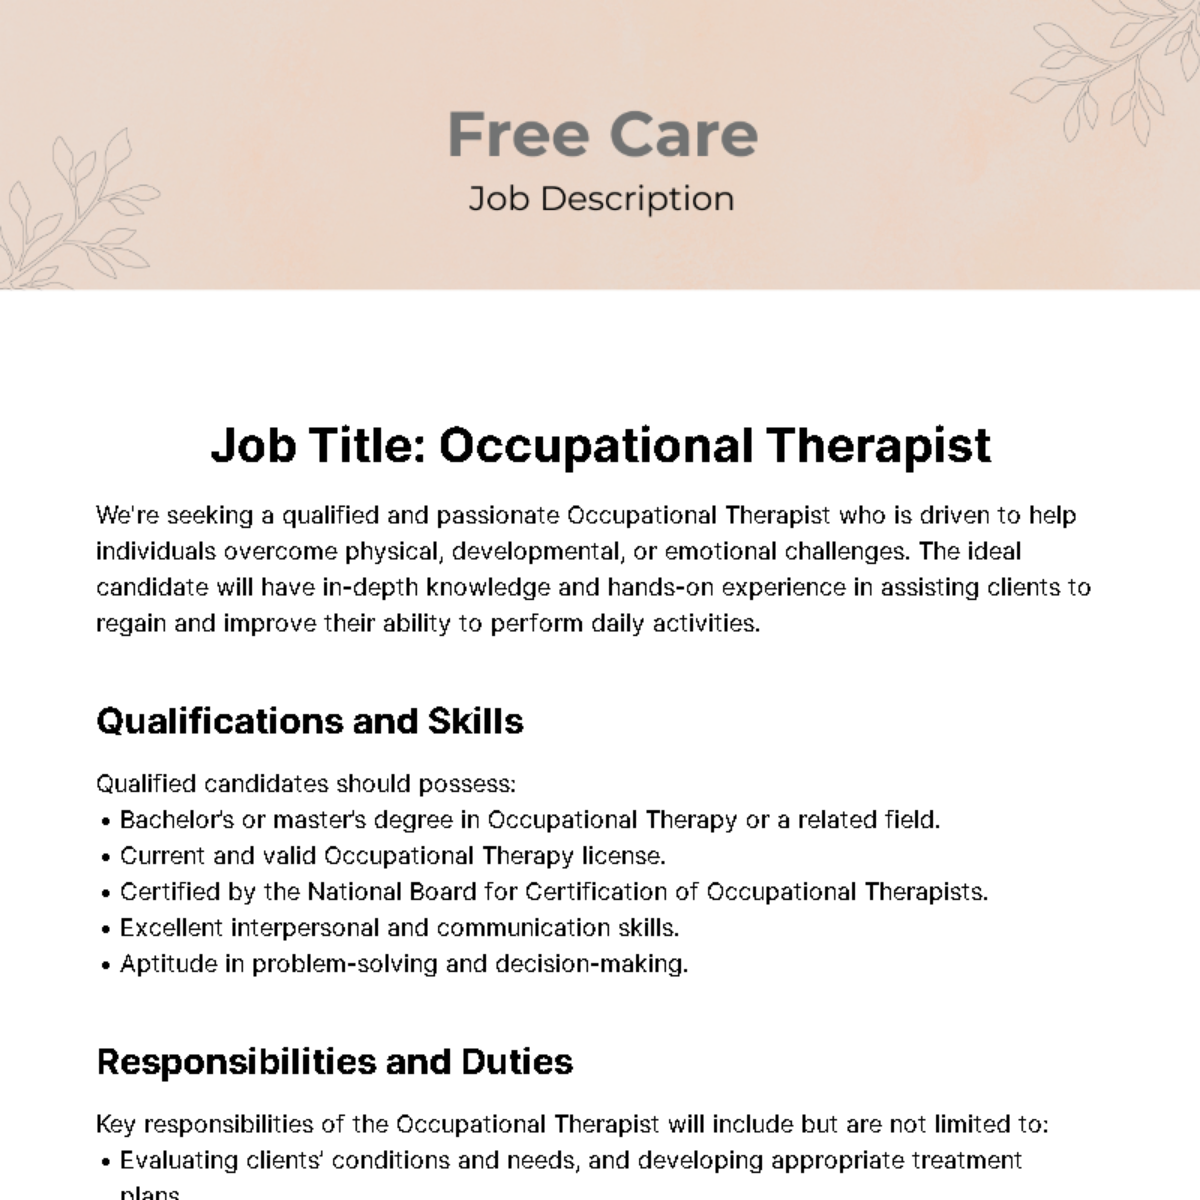 Free Care Job Description Template